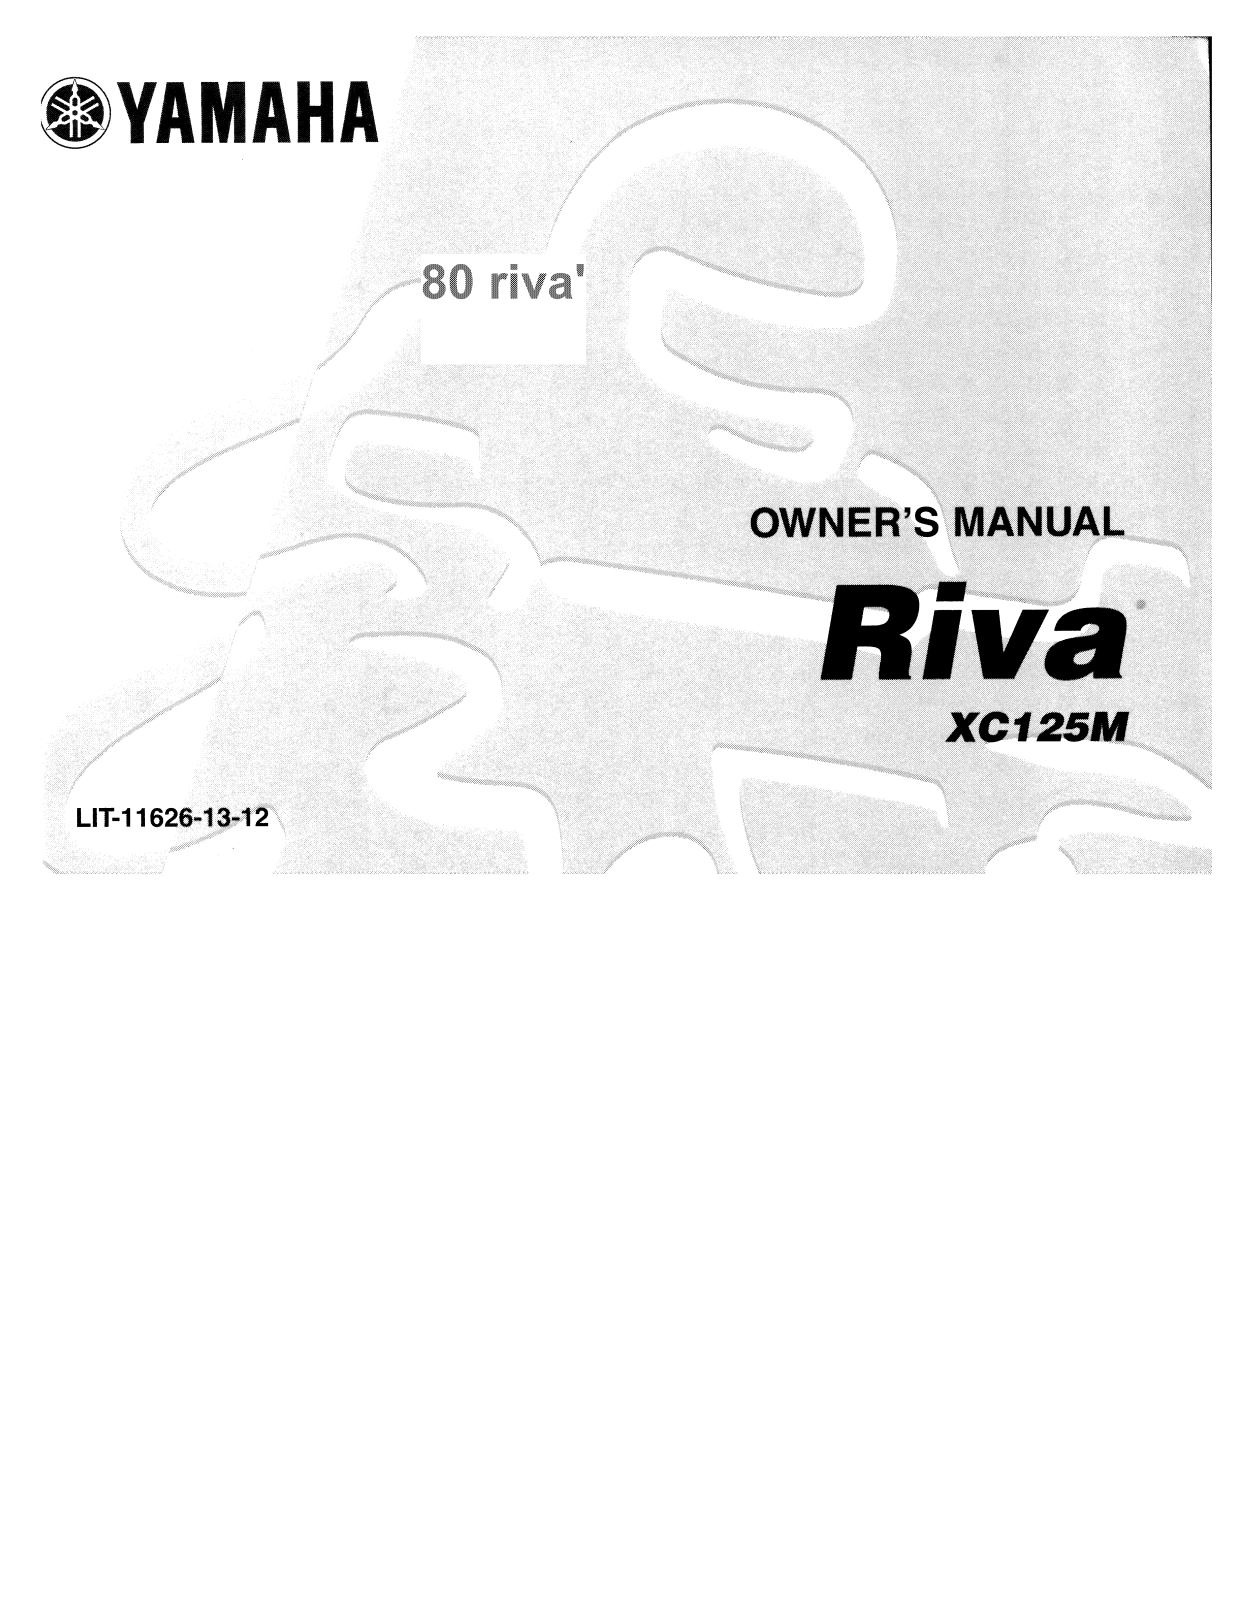 Yamaha RIVA 125, XC125M Manual